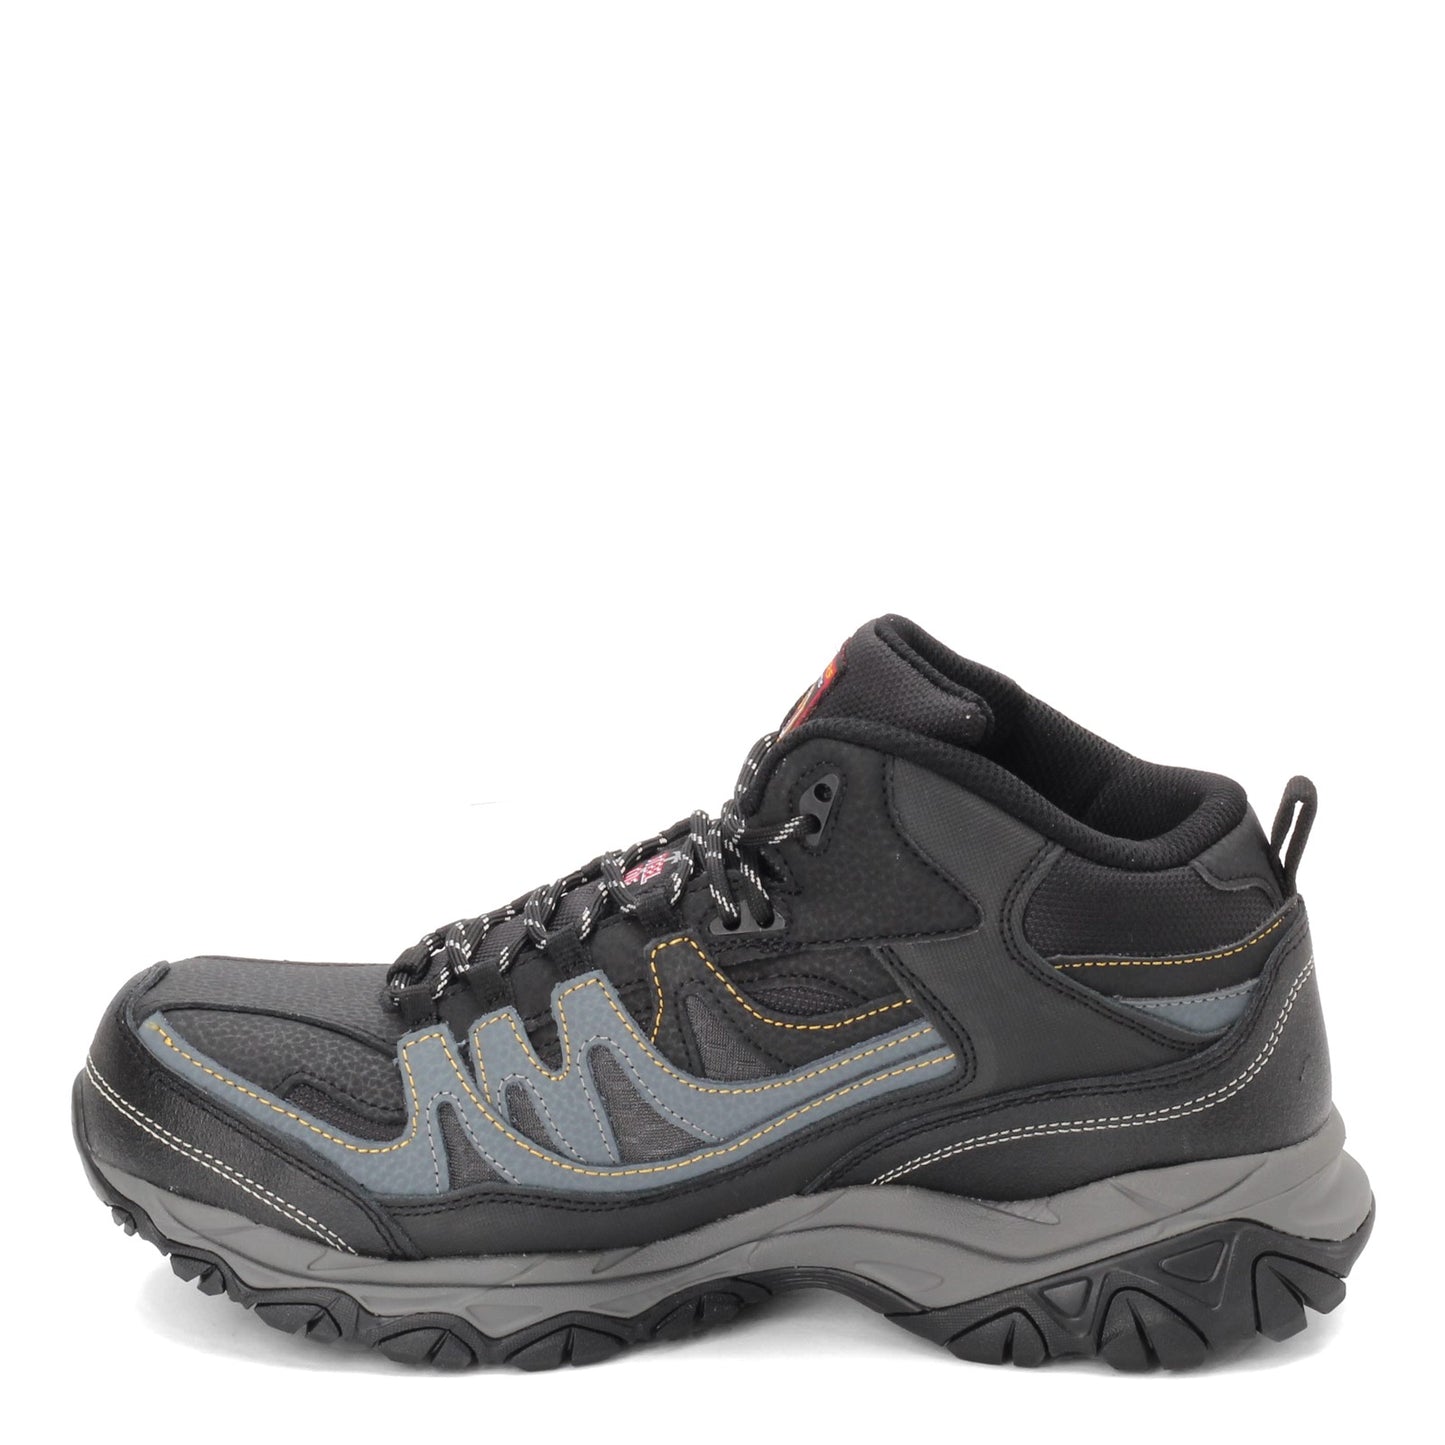 Peltz Shoes  Men's Skechers Work Relaxed Fit: Holdredge - Rebem ST Boot - Wide Width Black/Charcoal 77108W-BKCC